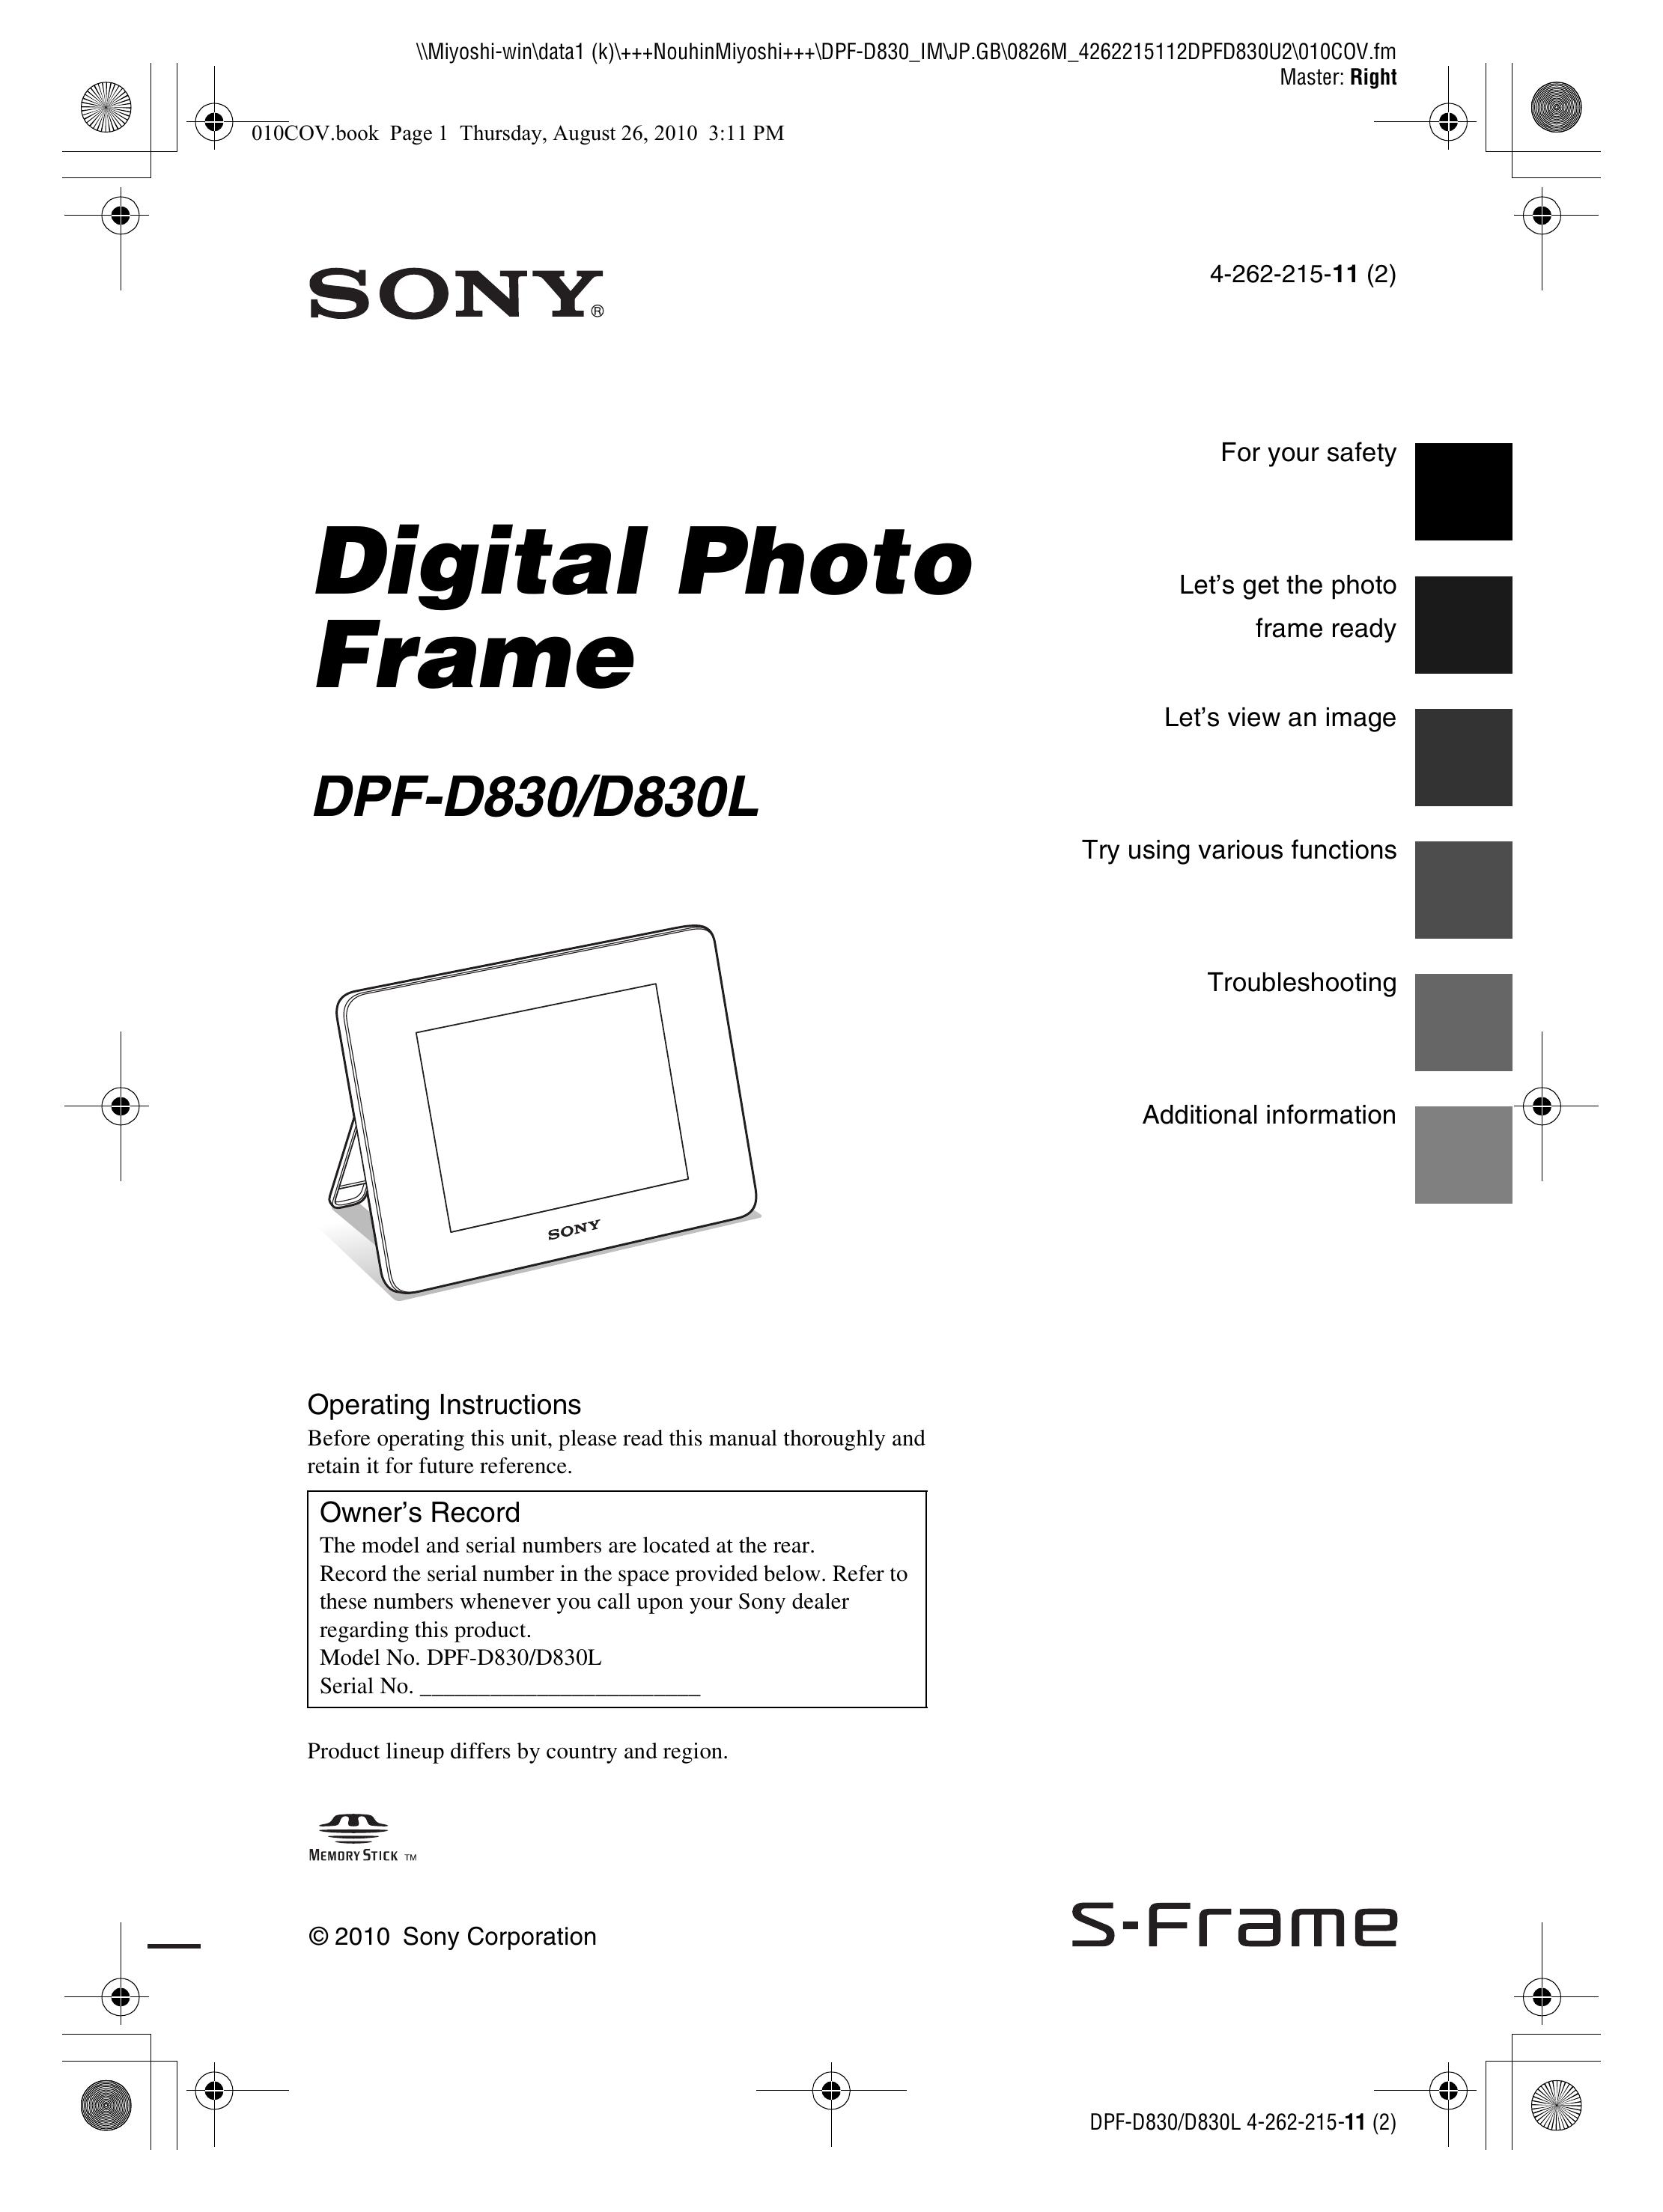 Sony DPF-D830 Digital Photo Frame User Manual